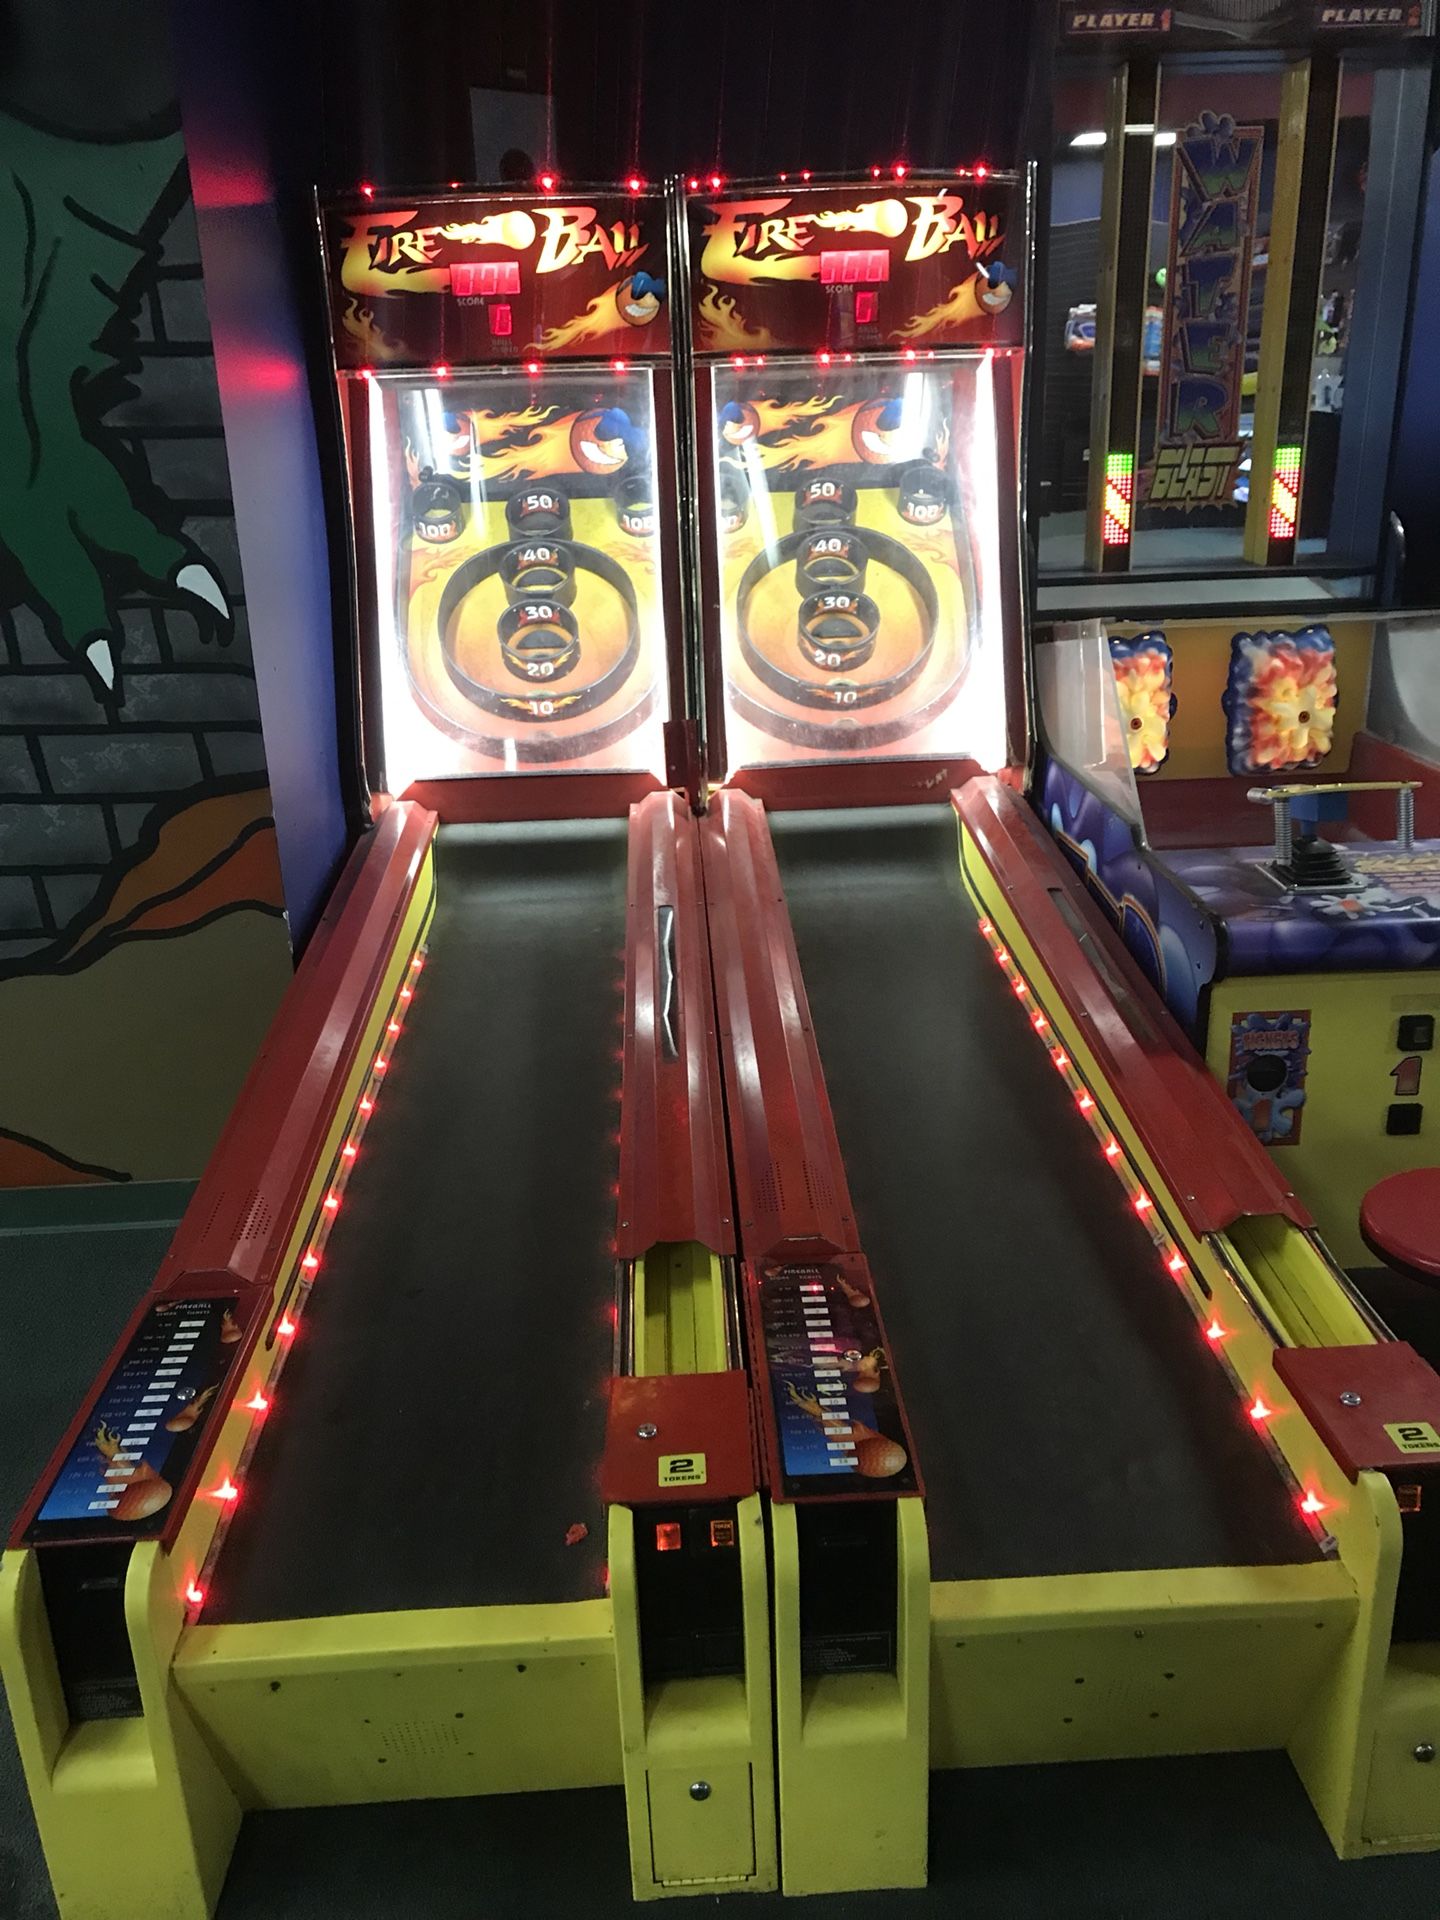 Fire ball skeeball arcade redemption ticket game